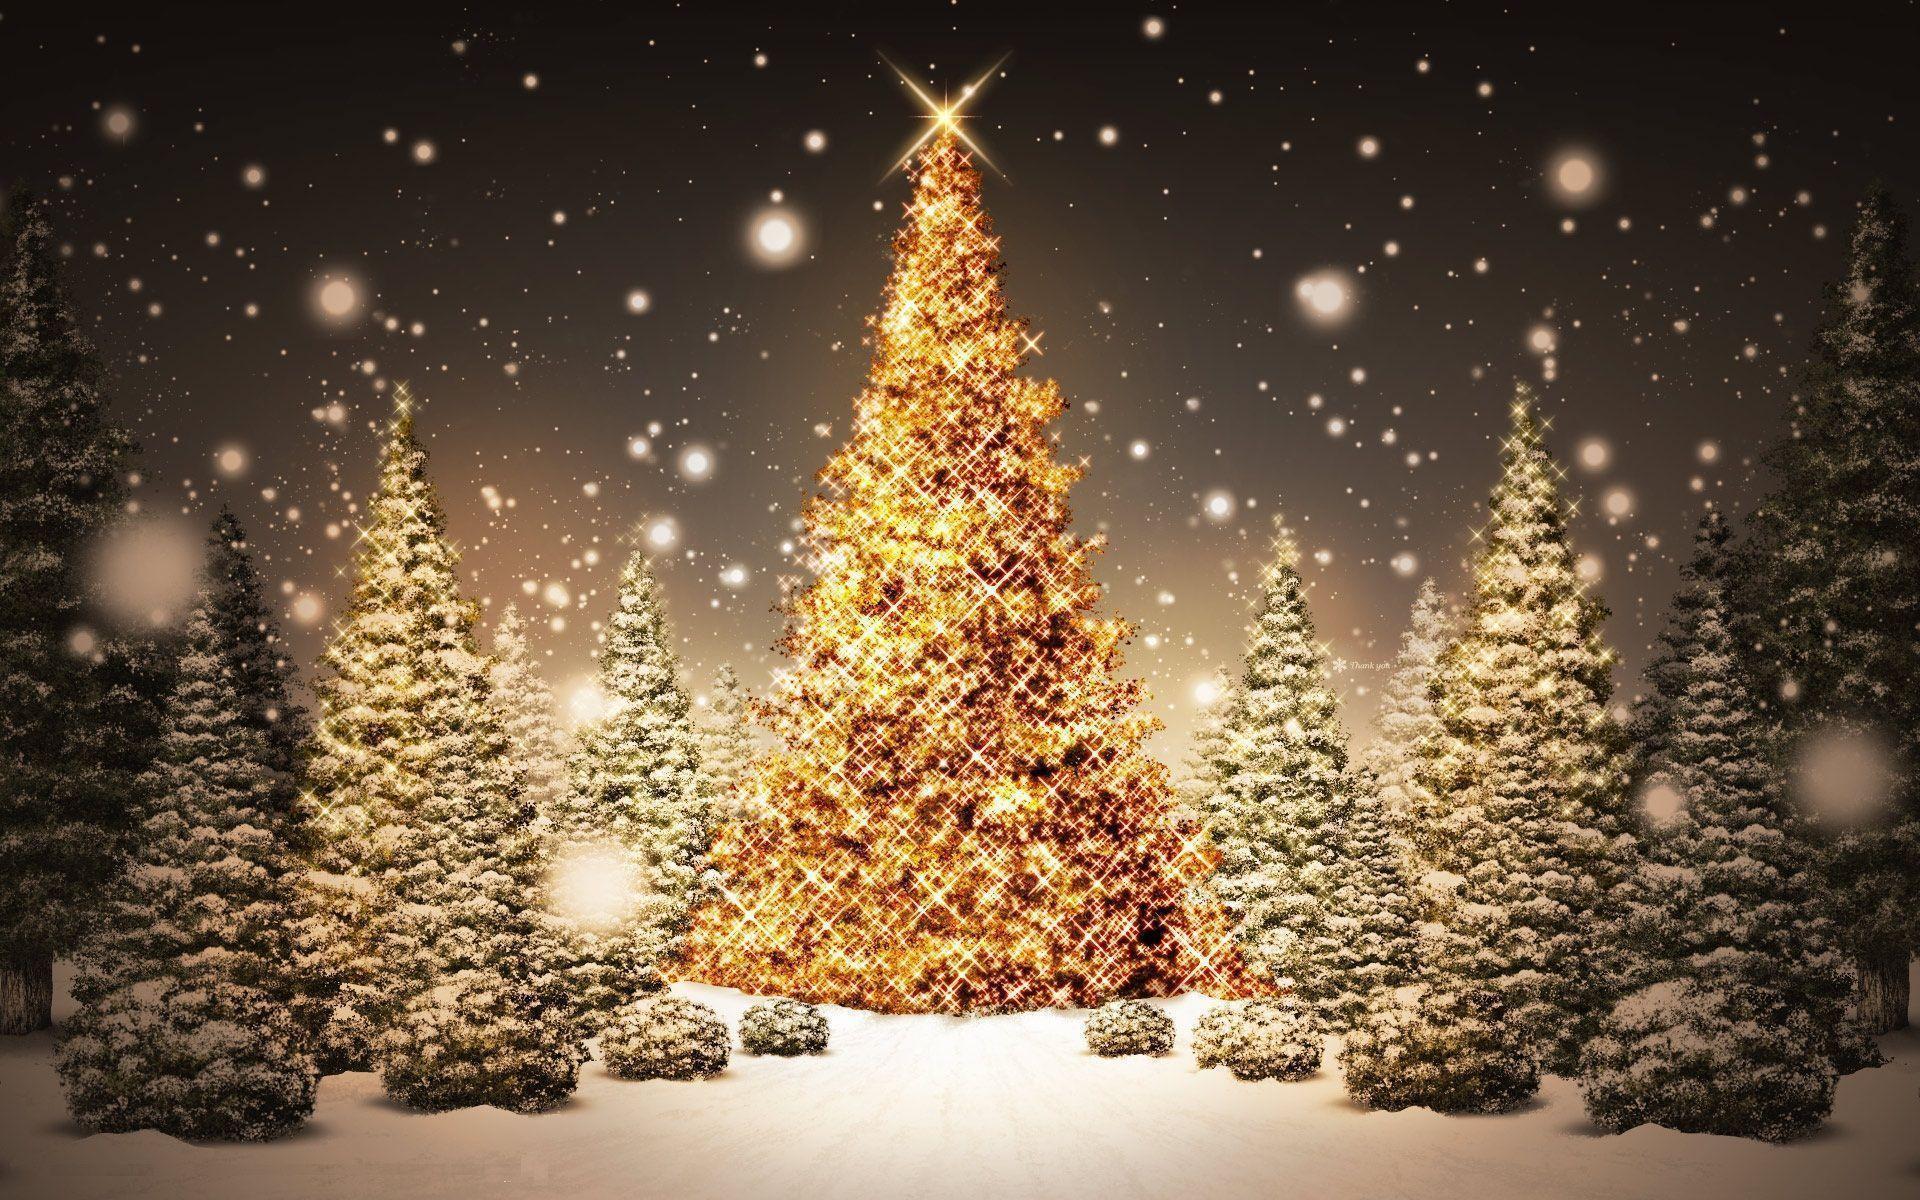 Christmas Holiday Desktop Wallpaper and Image